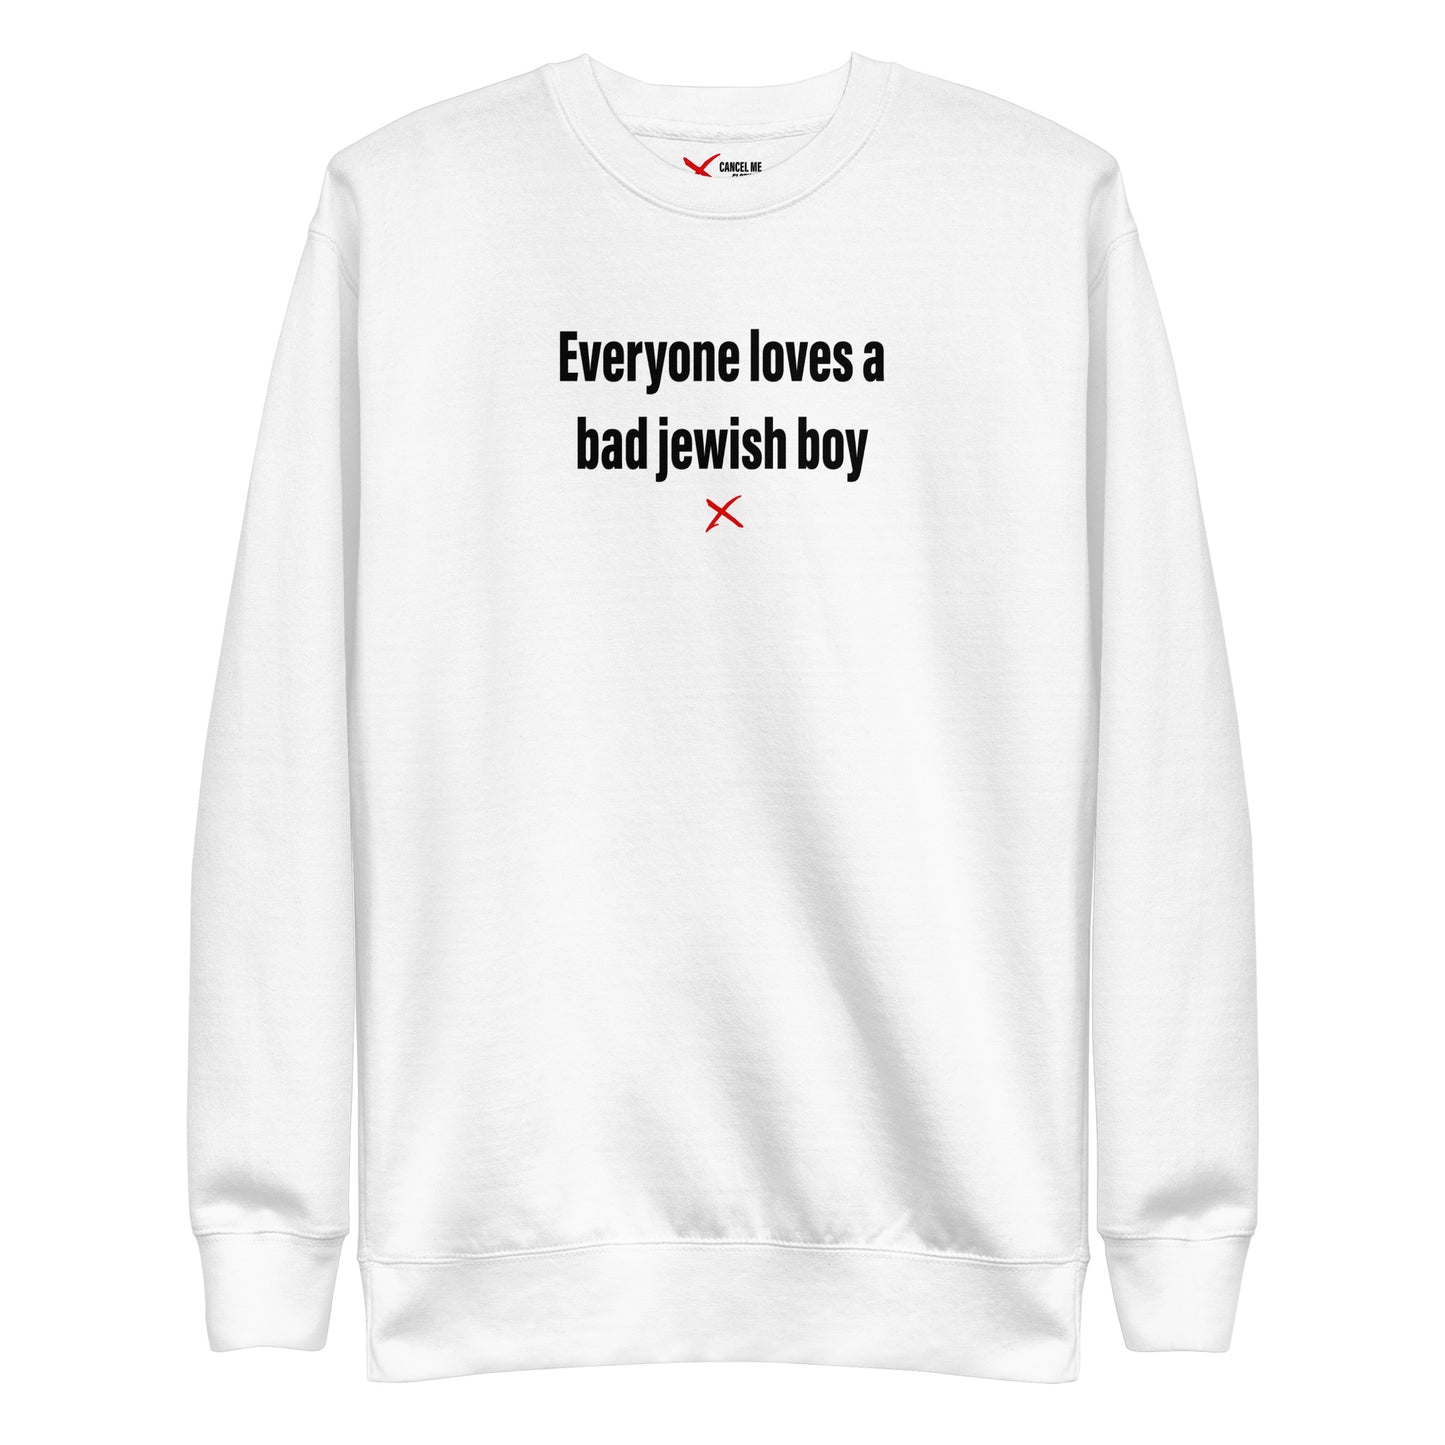 Everyone loves a bad jewish boy - Sweatshirt